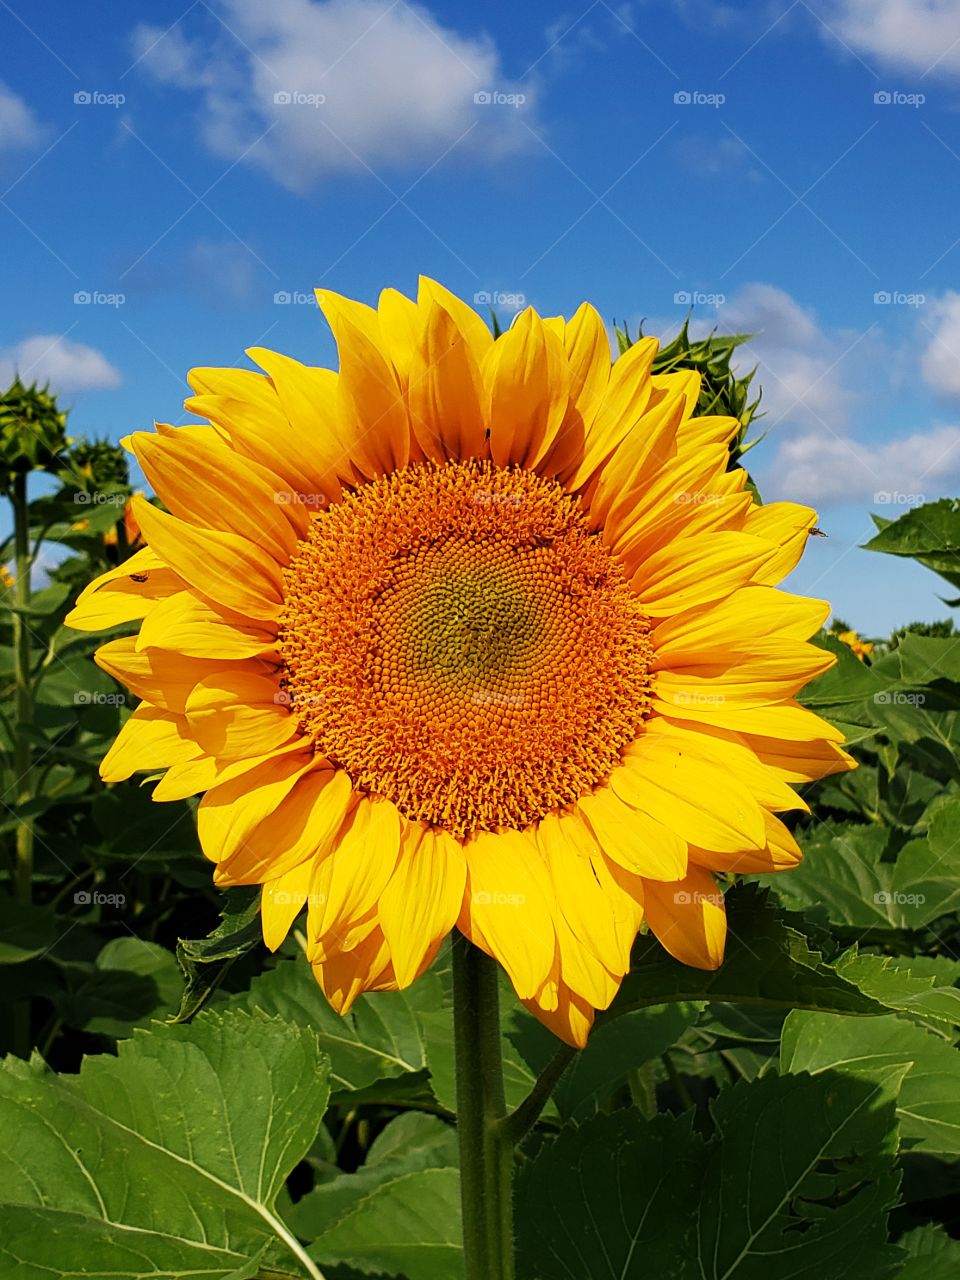 stunning sunflower